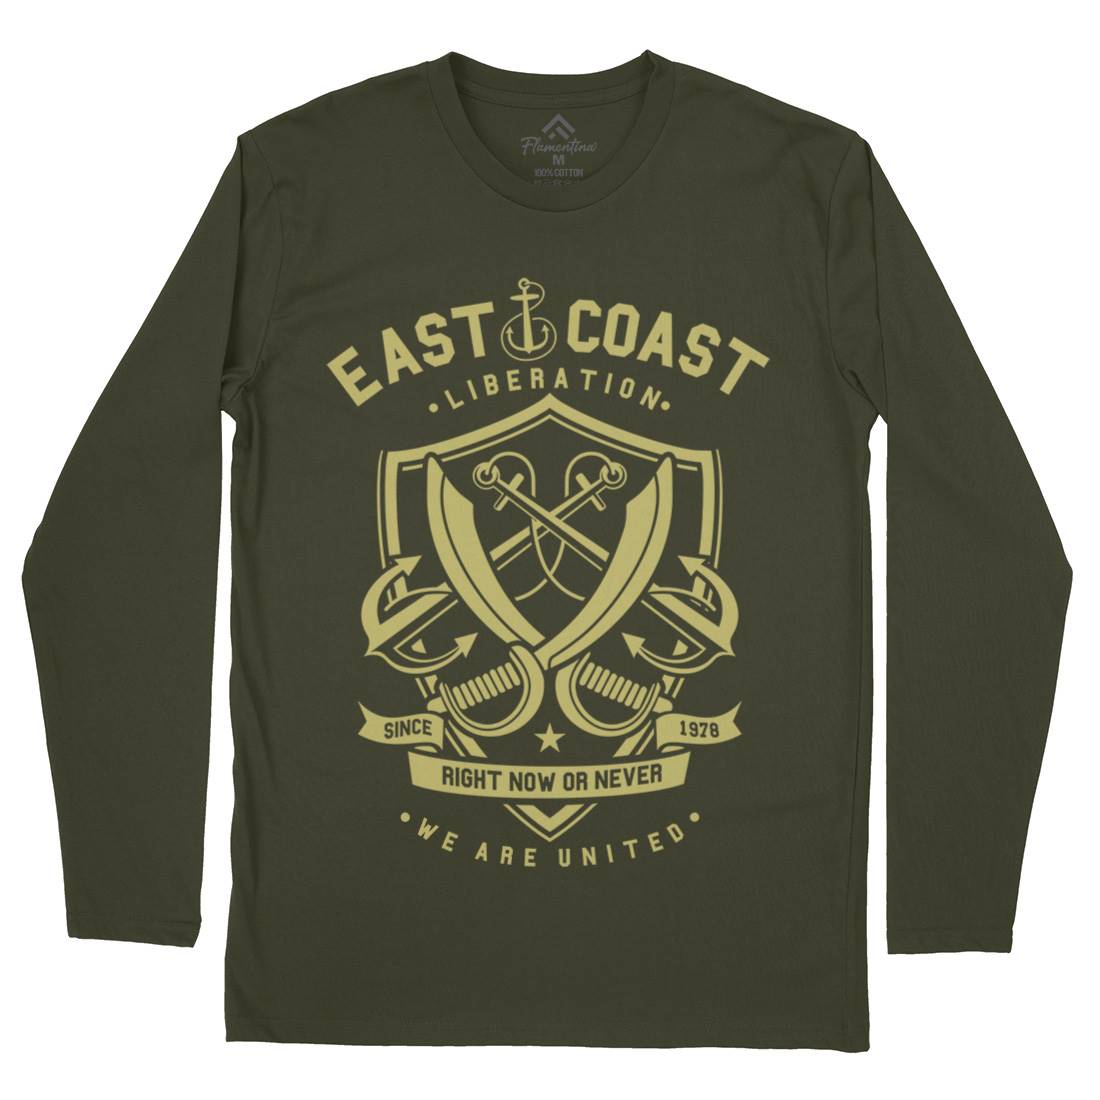 East Coast Anchor Mens Long Sleeve T-Shirt Navy A226